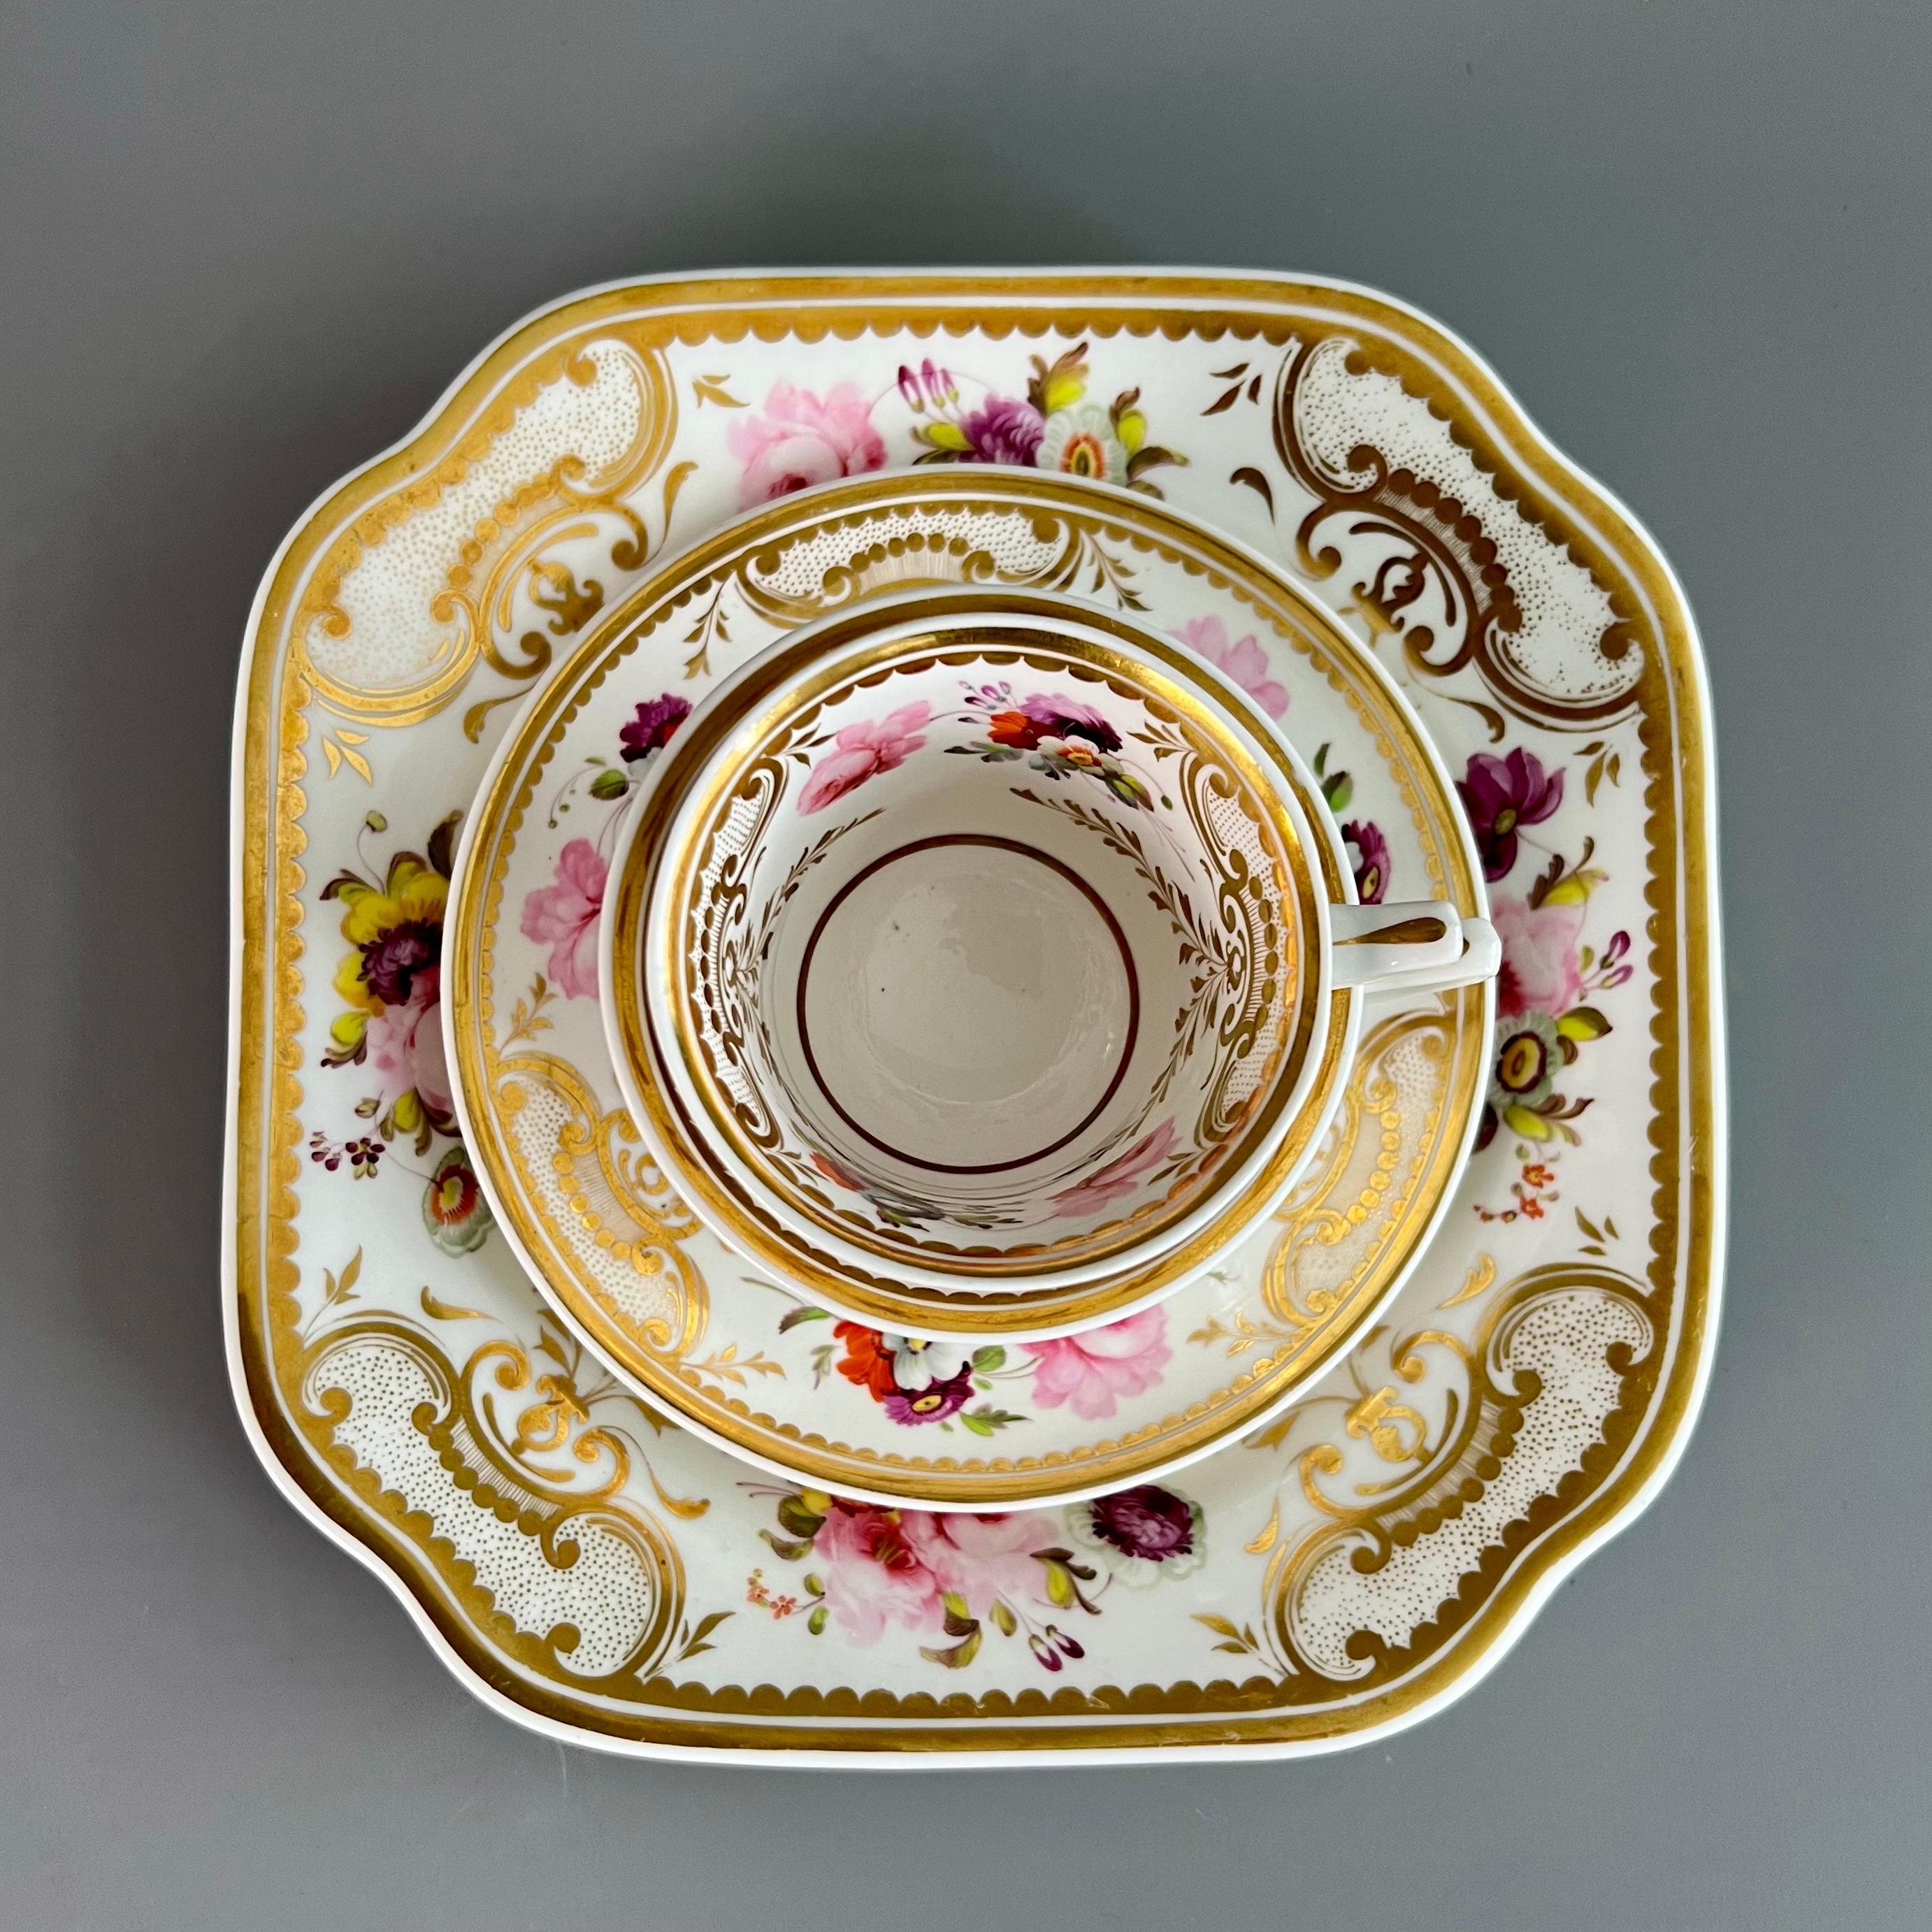 H&R Daniel Plate, White, Floral, Etruscan Shape, Regency, circa 1825 For Sale 6